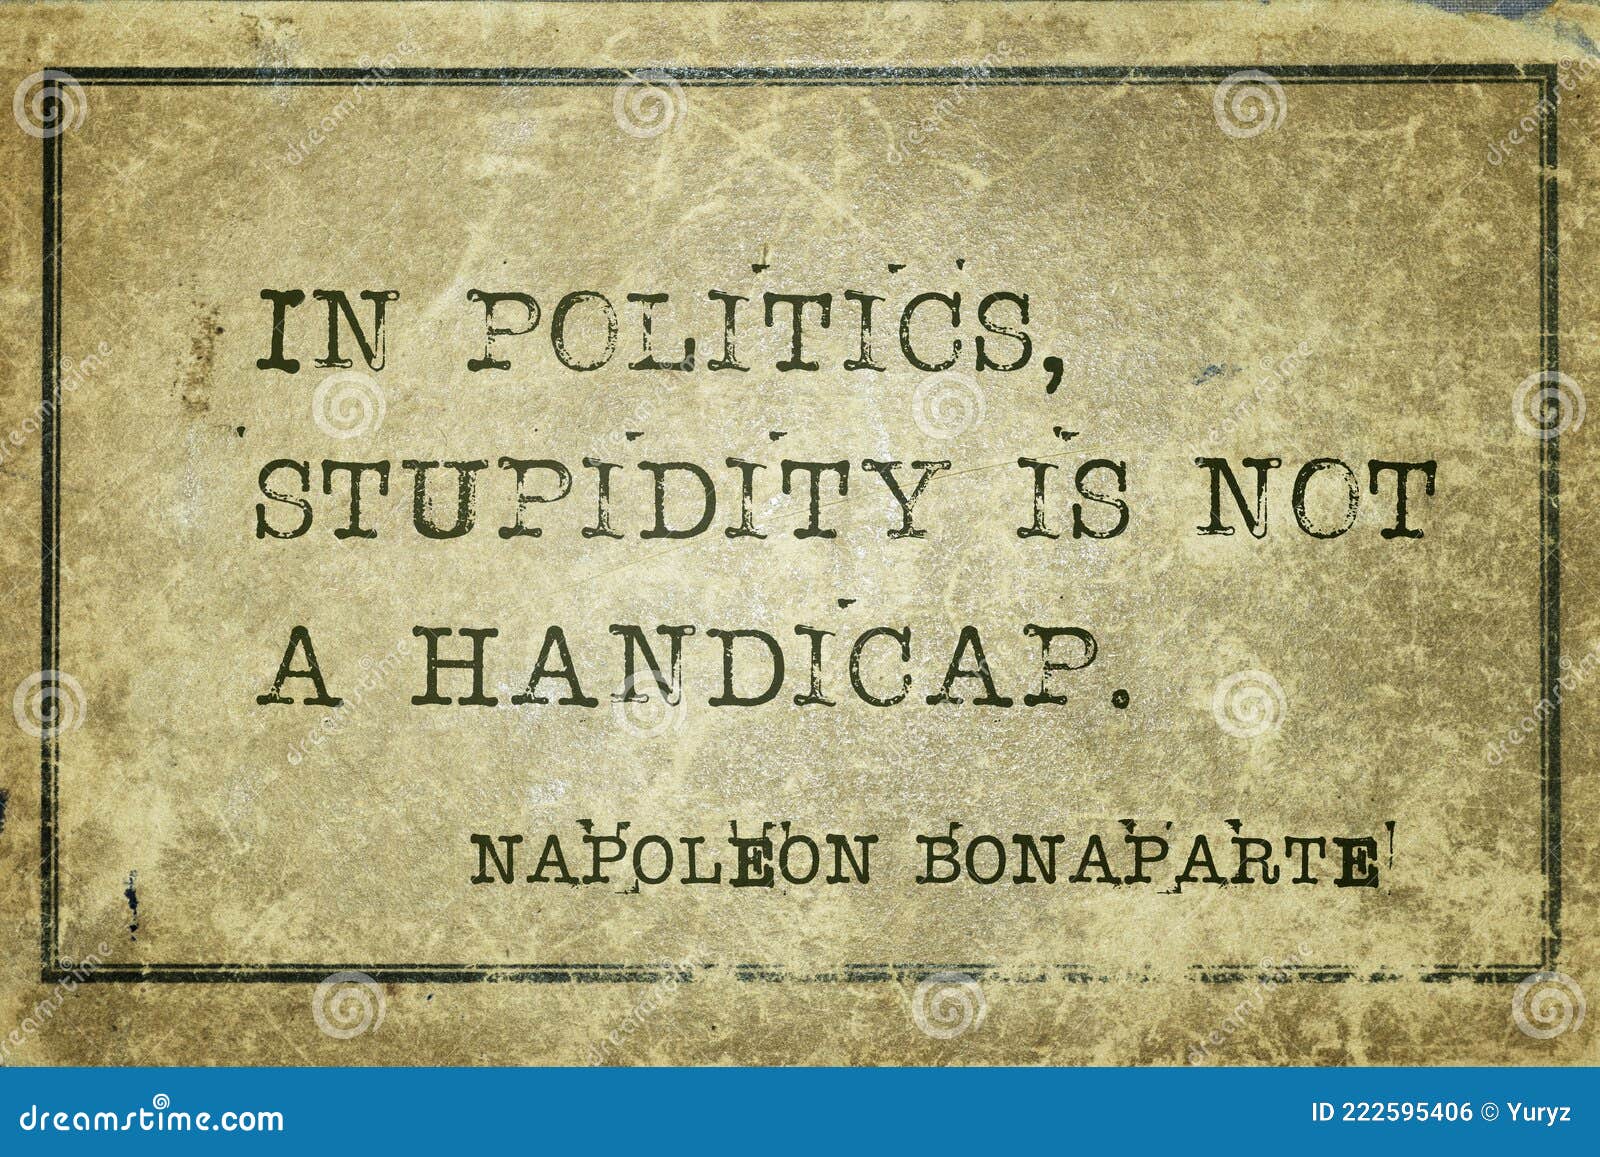 politics stupidity napoleon